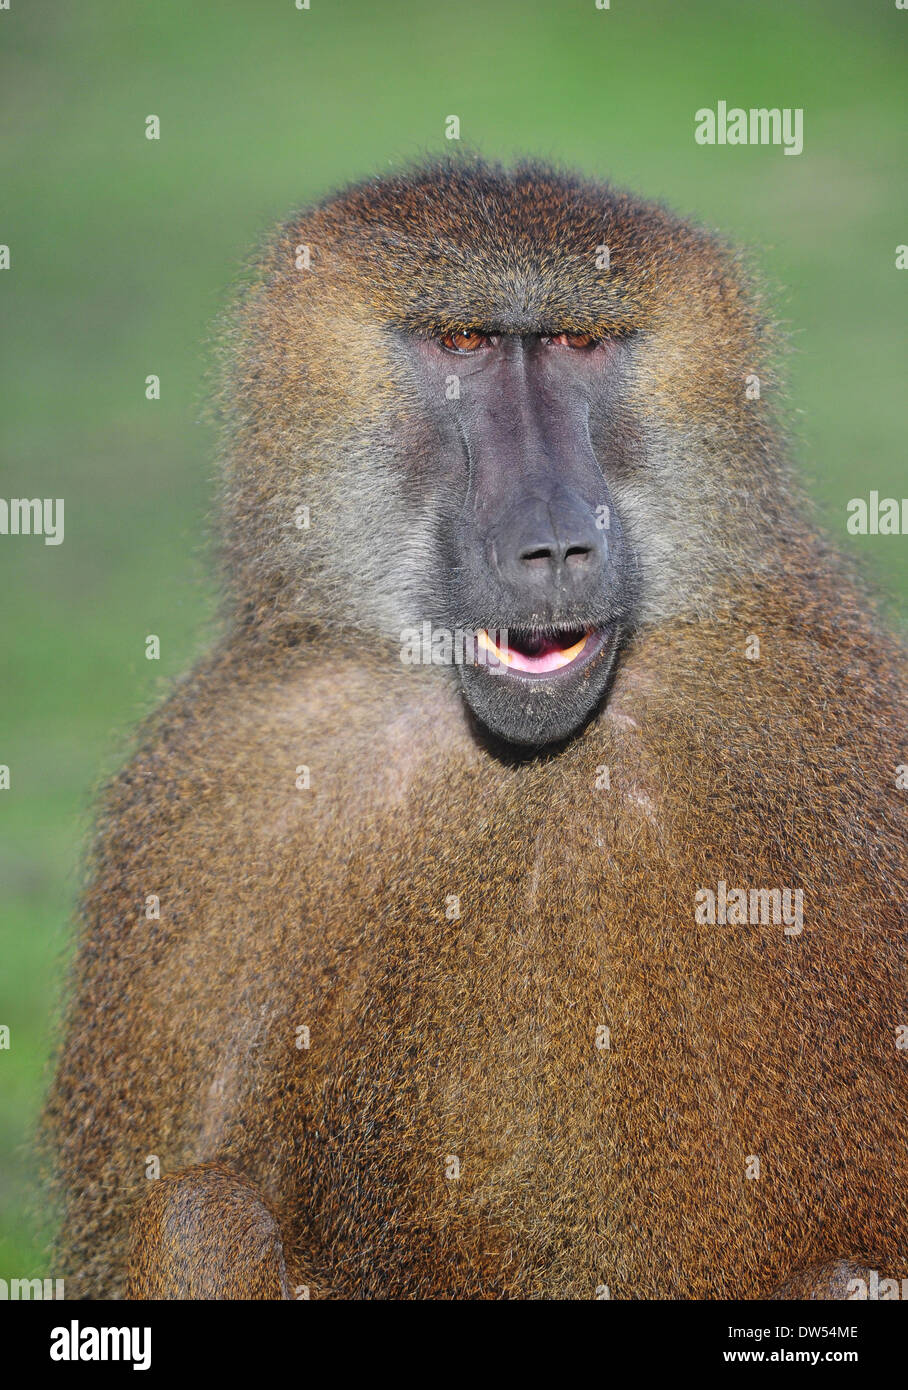 Guinea baboon (Papio papio) Stock Photo